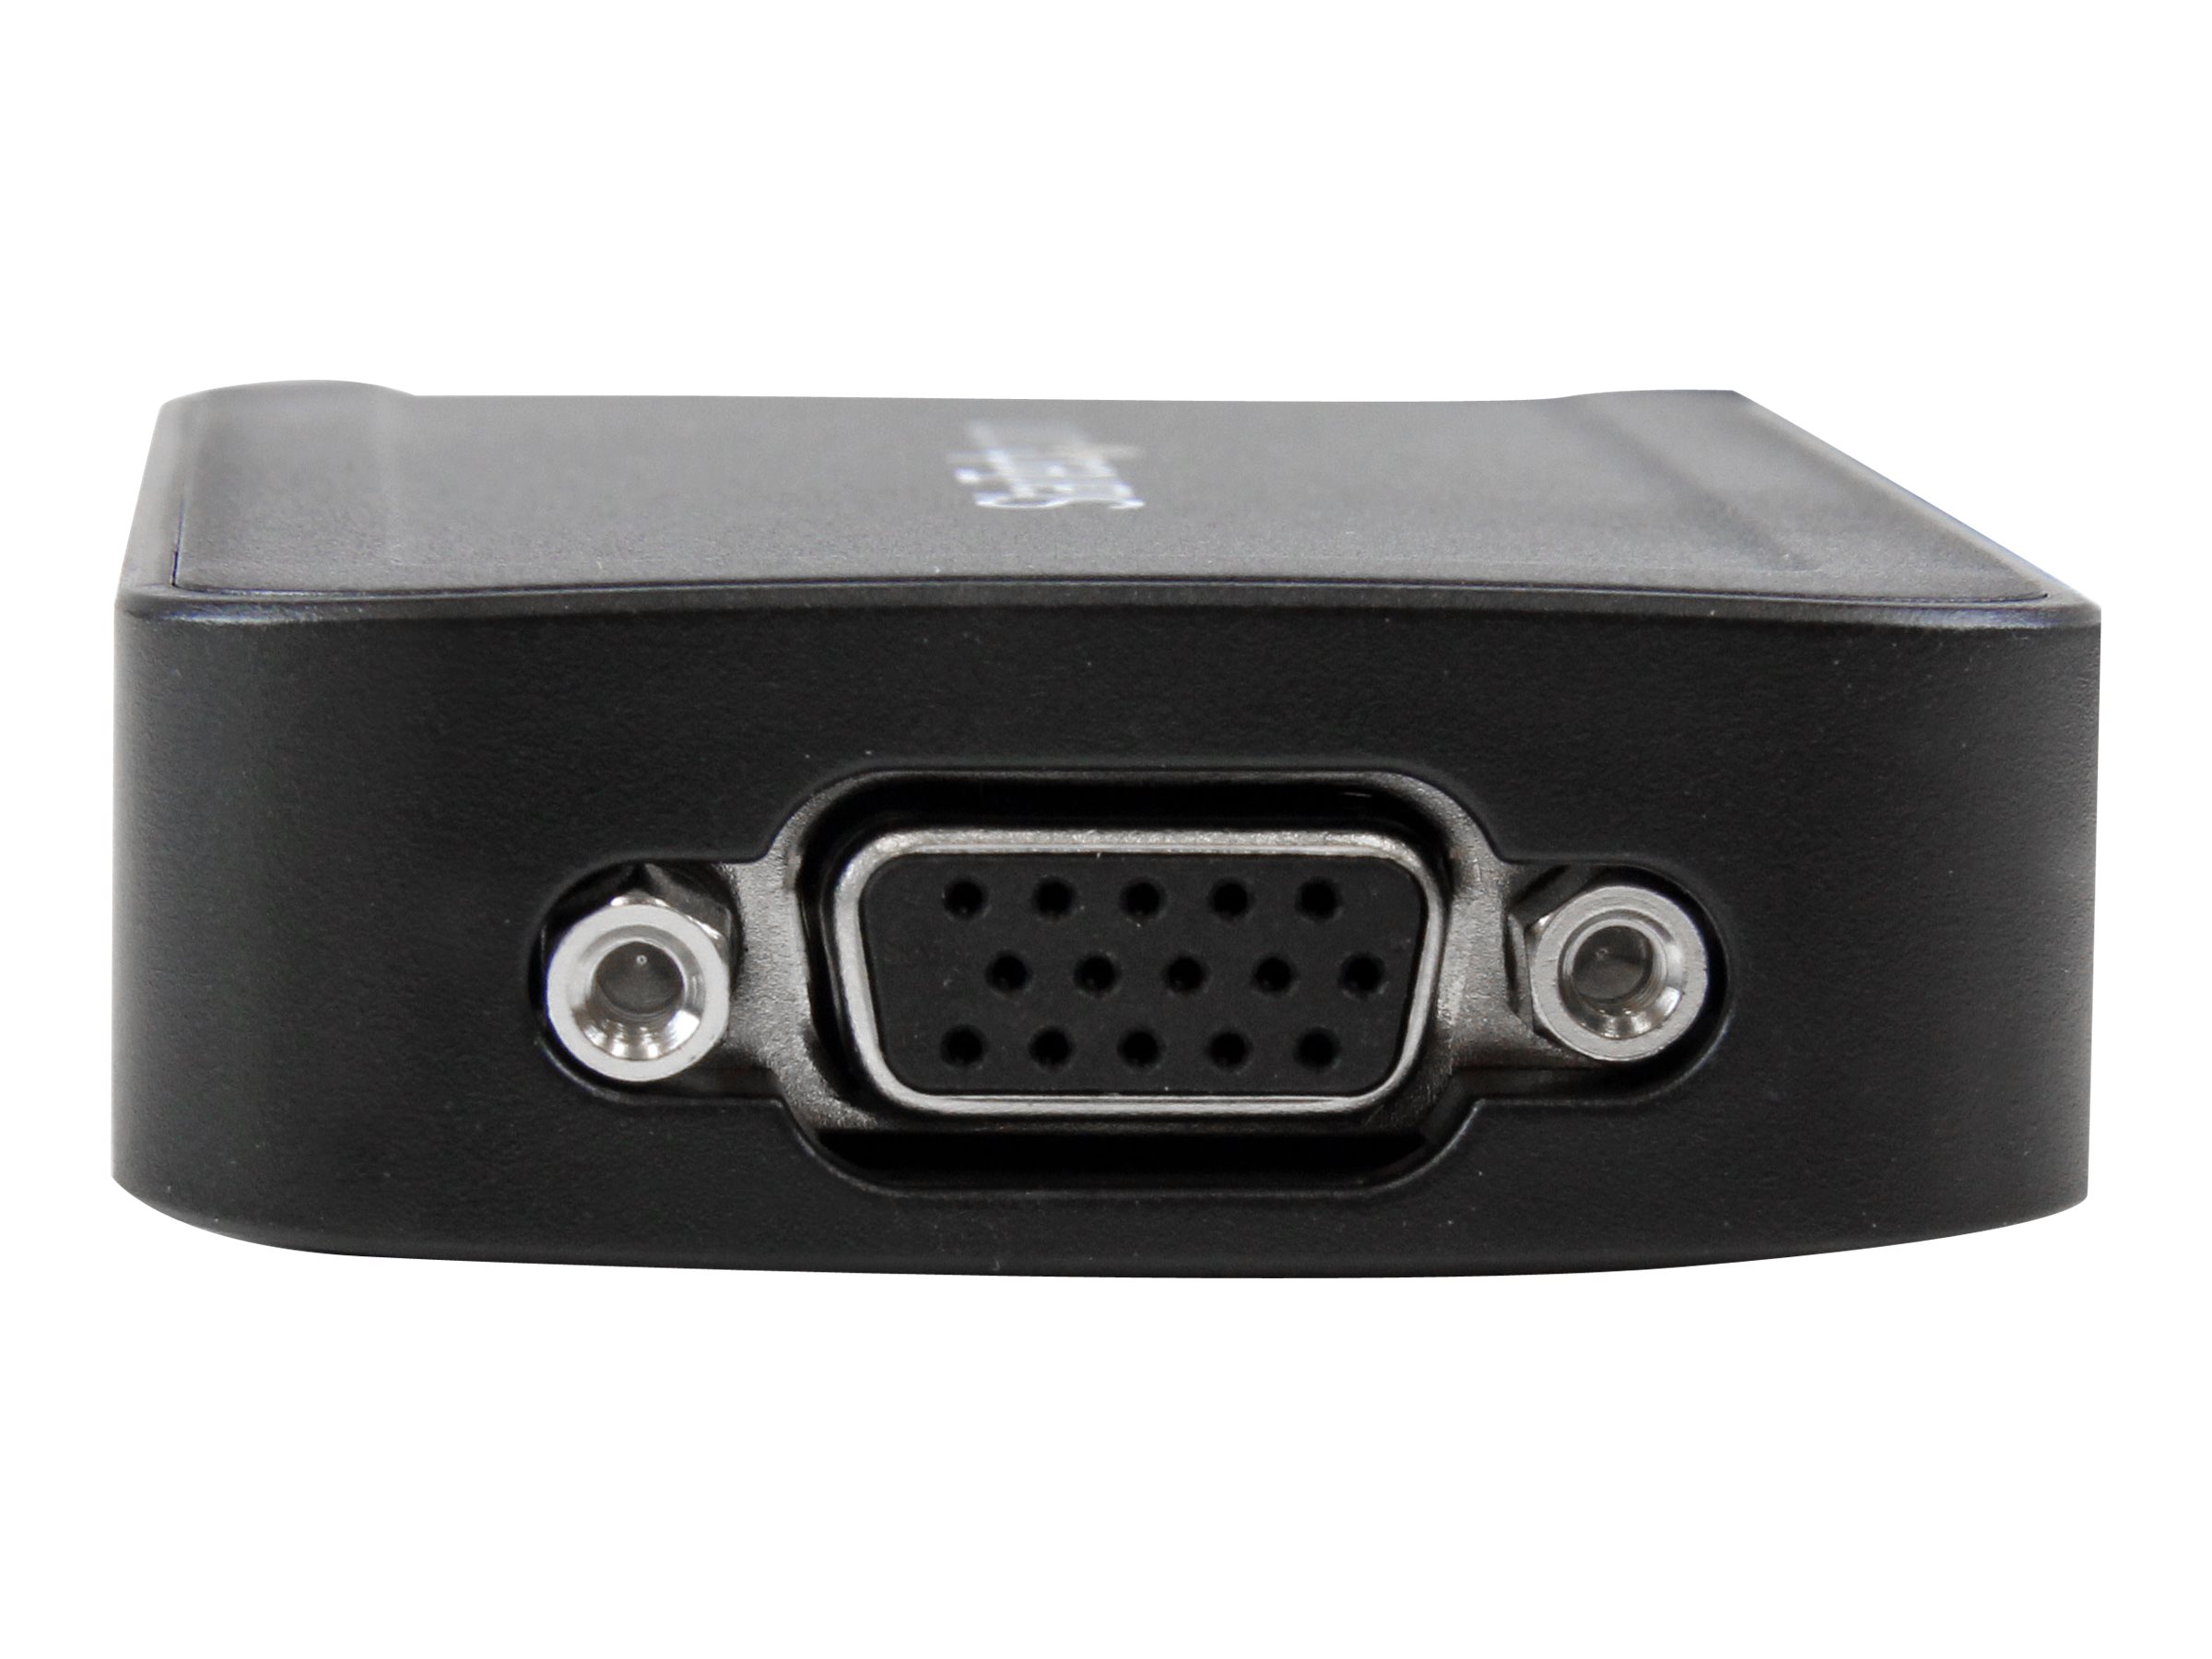 StarTech.com USB VGA Adapter - 1920x1200 - Multi Display Adapter Kabel - Externe Monitor Grafikkarte - 1080p - USB 2.0 - USB/VGA-Adapter - TAA-konform - USB (M)